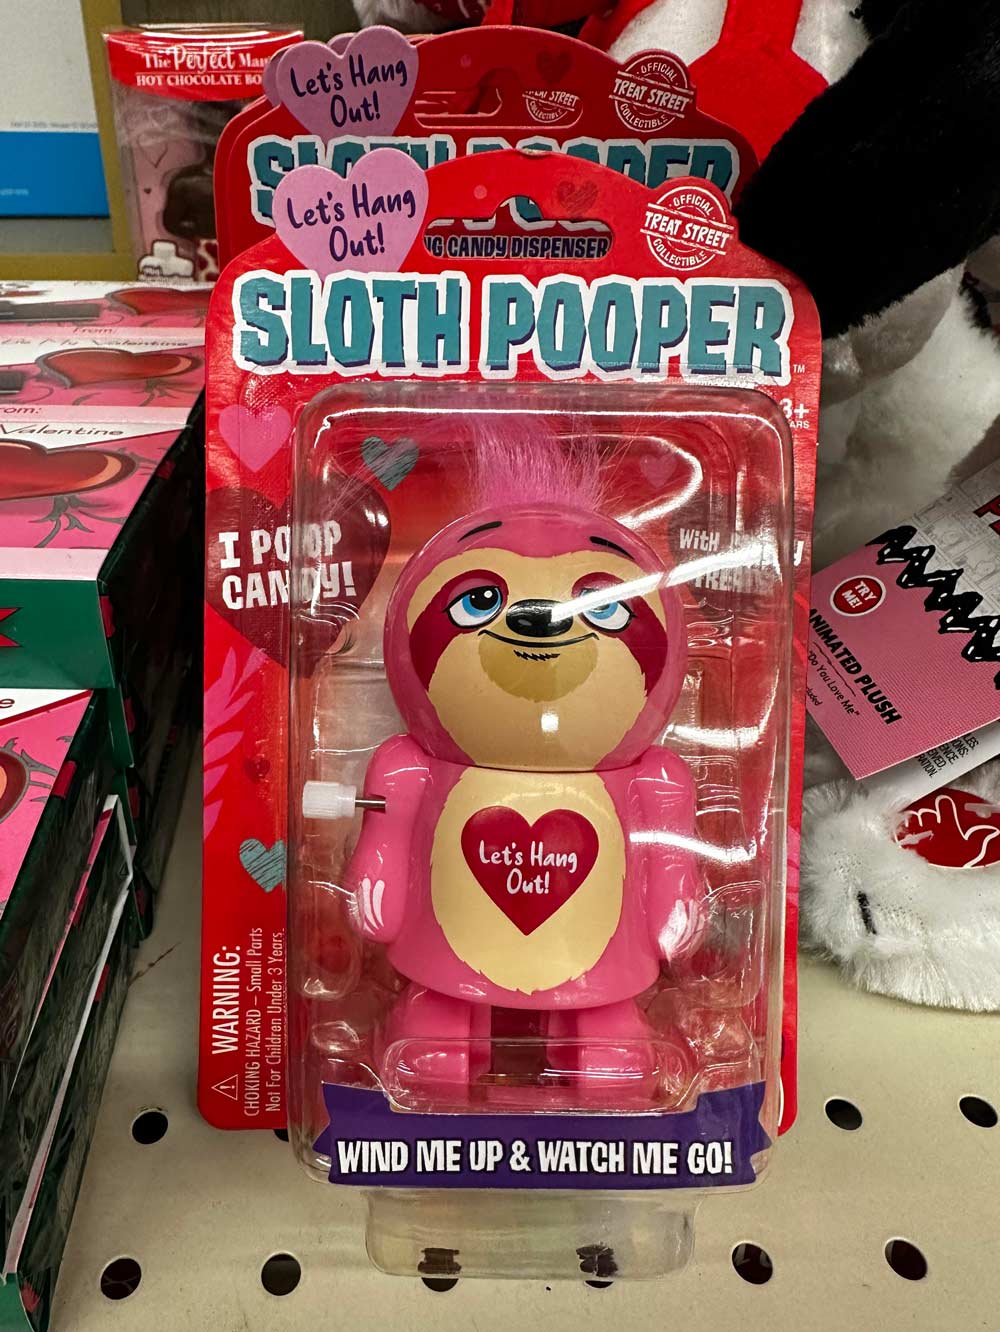 This Valentine’s candy dispenser